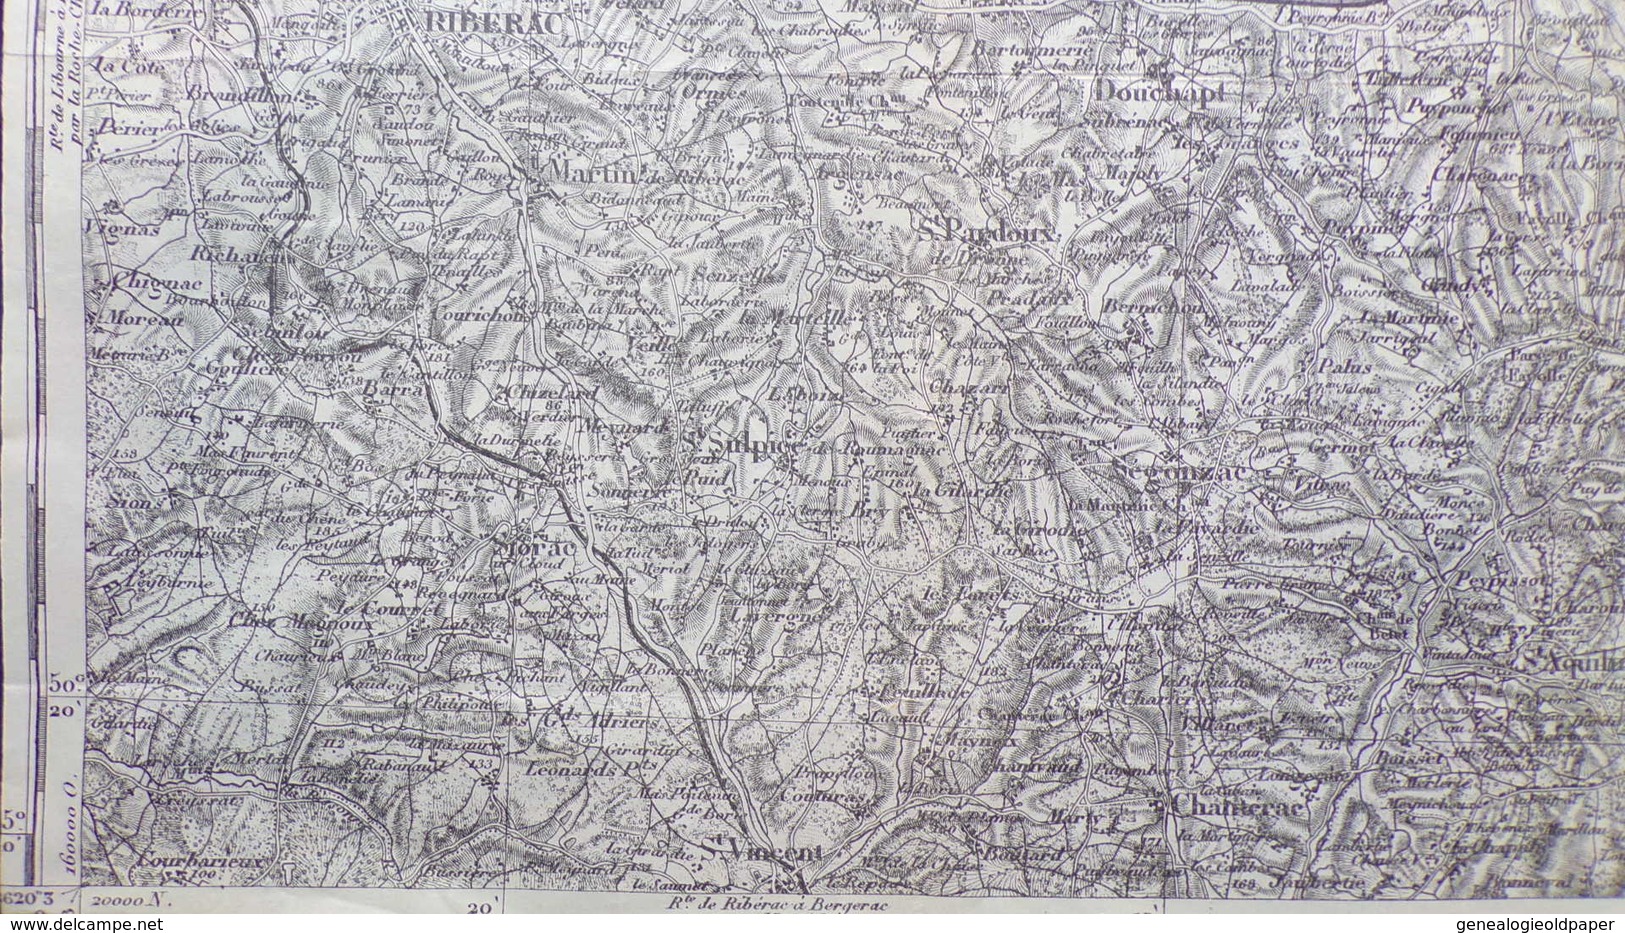 24- RARE CARTE 1909- RIBERAC-DOUCHAPT-ALLEMANS-CHAPDEUIL-MARSAC-SAINT AQUILIN-BOURDEILLES-MENSIGNAC-SIORAC-LUSIGNAC - Topographical Maps